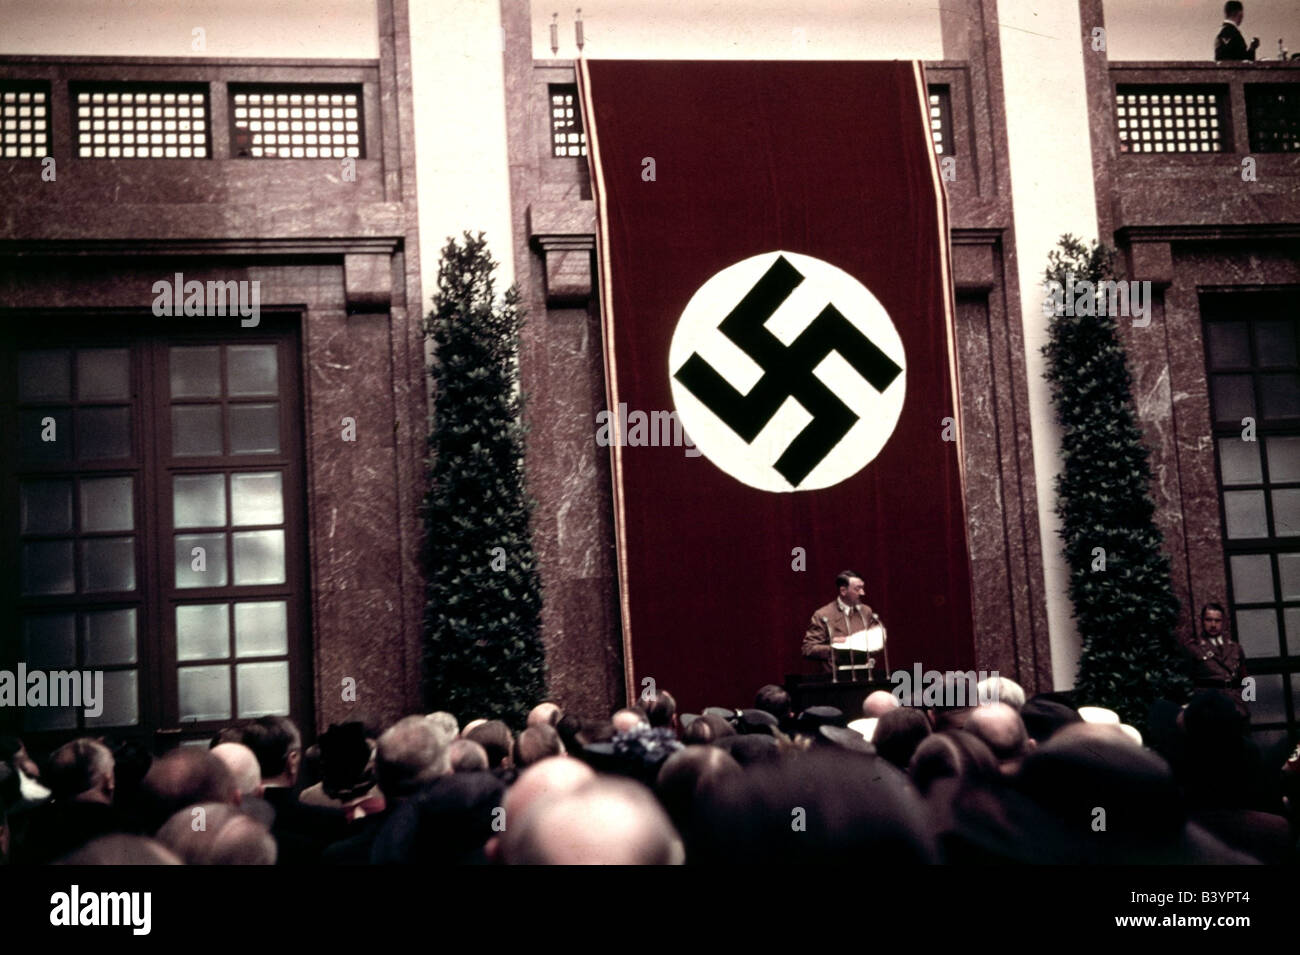 Hitler, Adolf, 20.4.1889 - 30.4.1945, German politician (NSDAP), Chancellor 30.1.1933 - 30.4.1945, speech during opening of Haus der Kunst, Munich 16.10.1938, flag, swastika, Nazi Germany, Third Reich, national socialism, nazi, 20th century, , Stock Photo